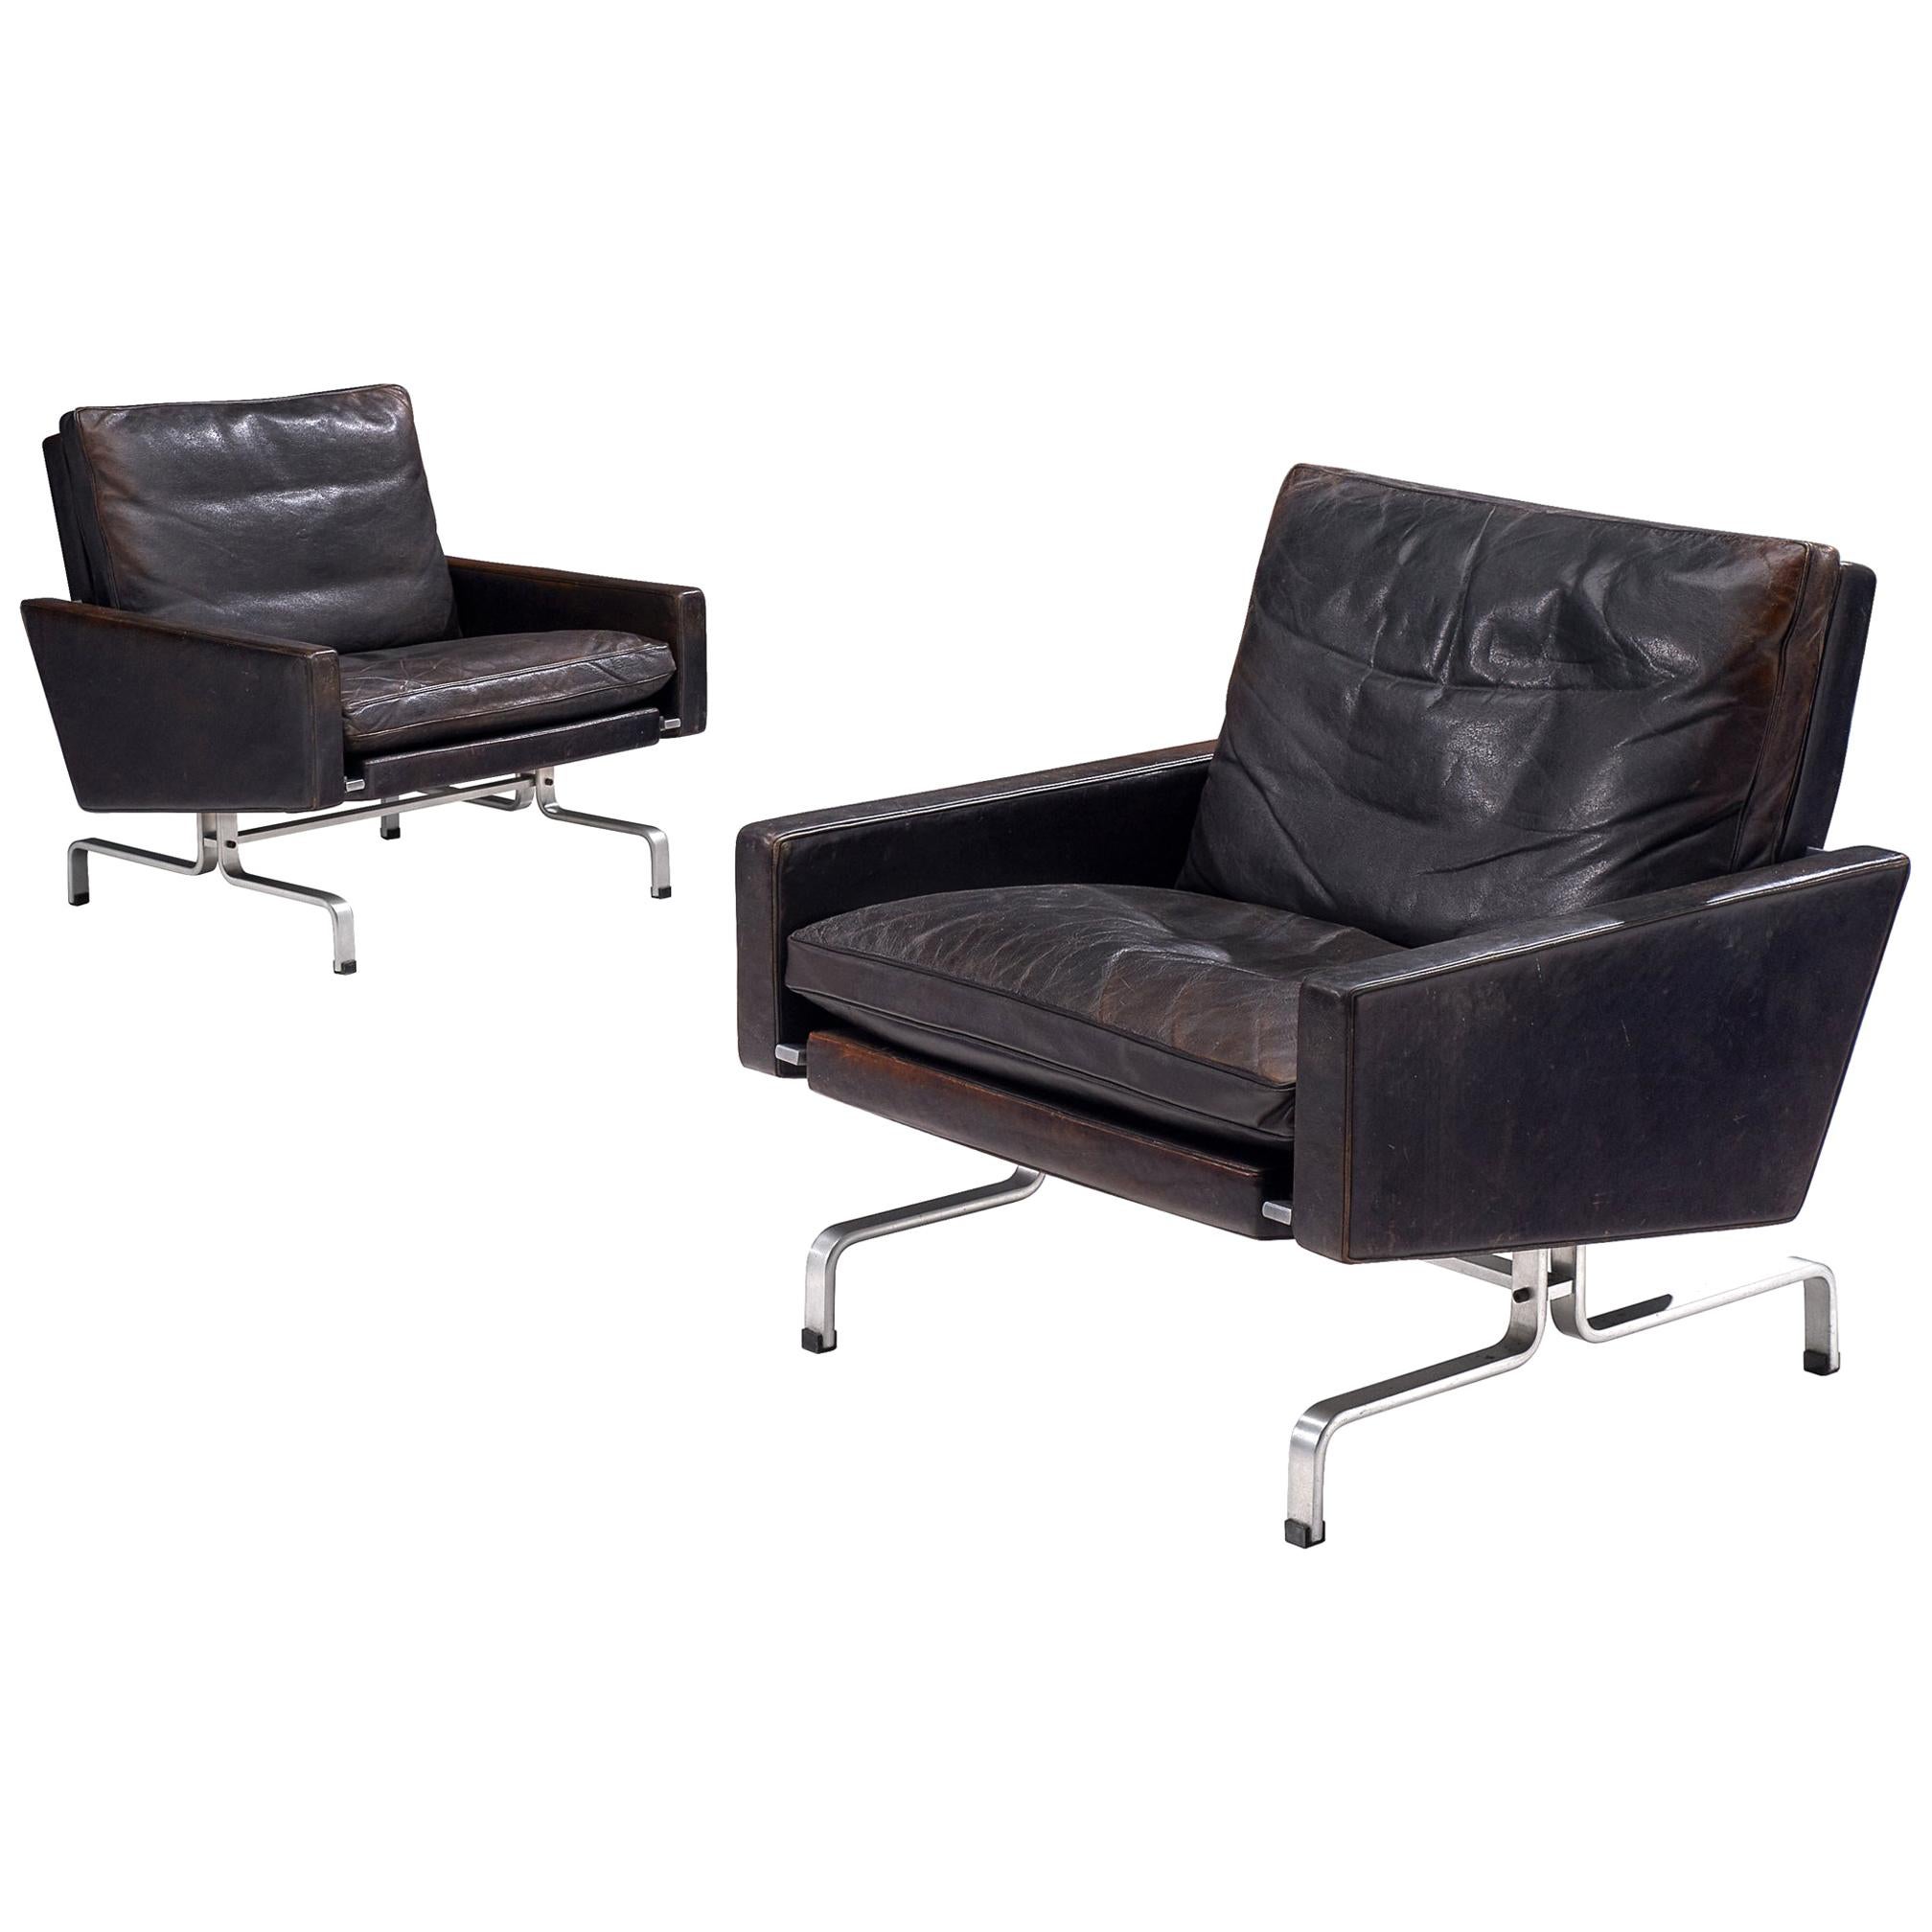 Pair of Poul Kjaerholm 'PK31-1' Lounge Chairs in Original Black Leather